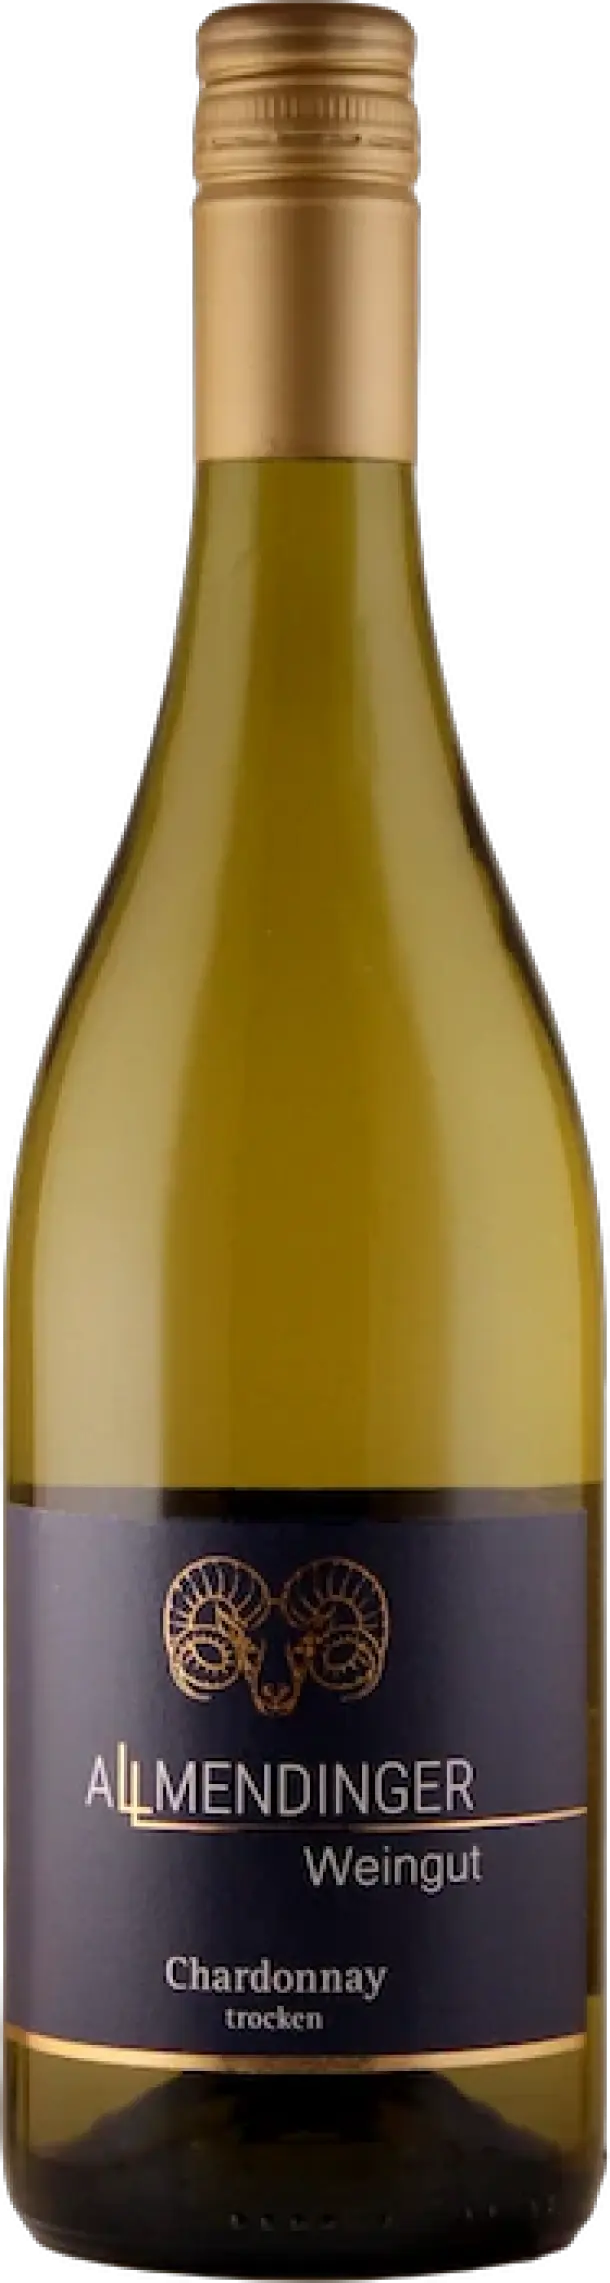 Chardonnay 21 trocken